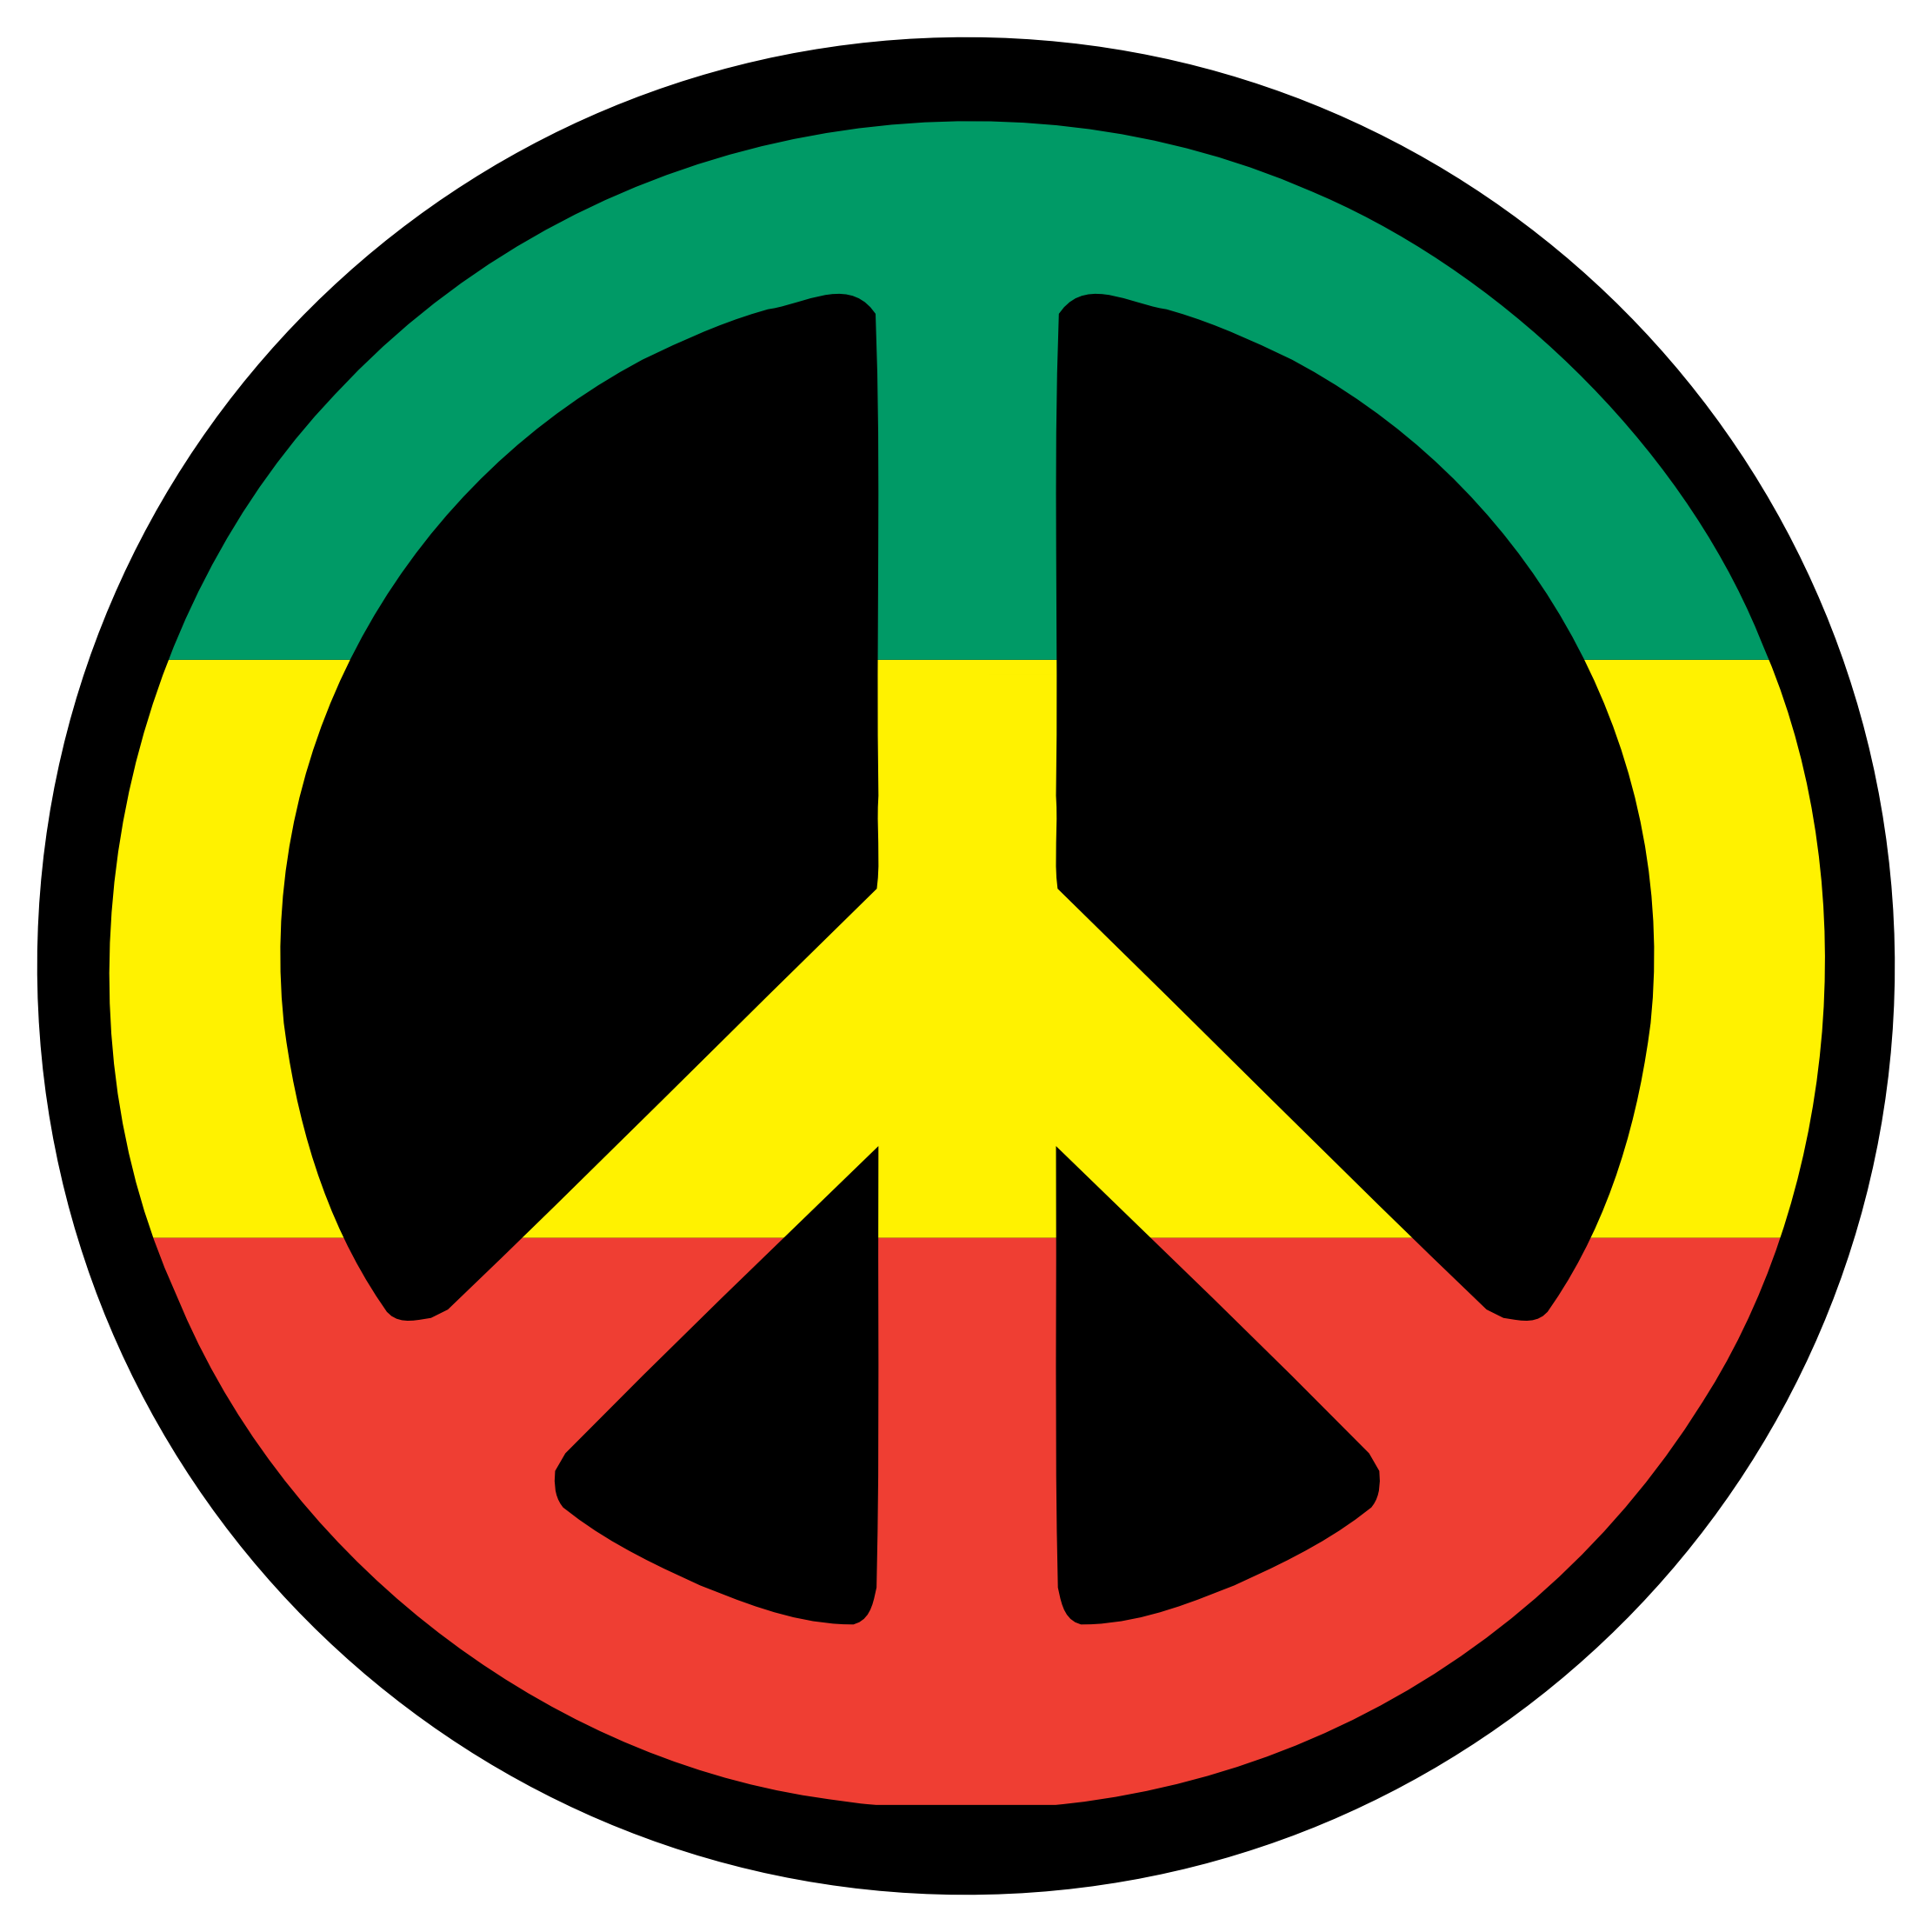 Peace Symbol Rasta - ClipArt Best